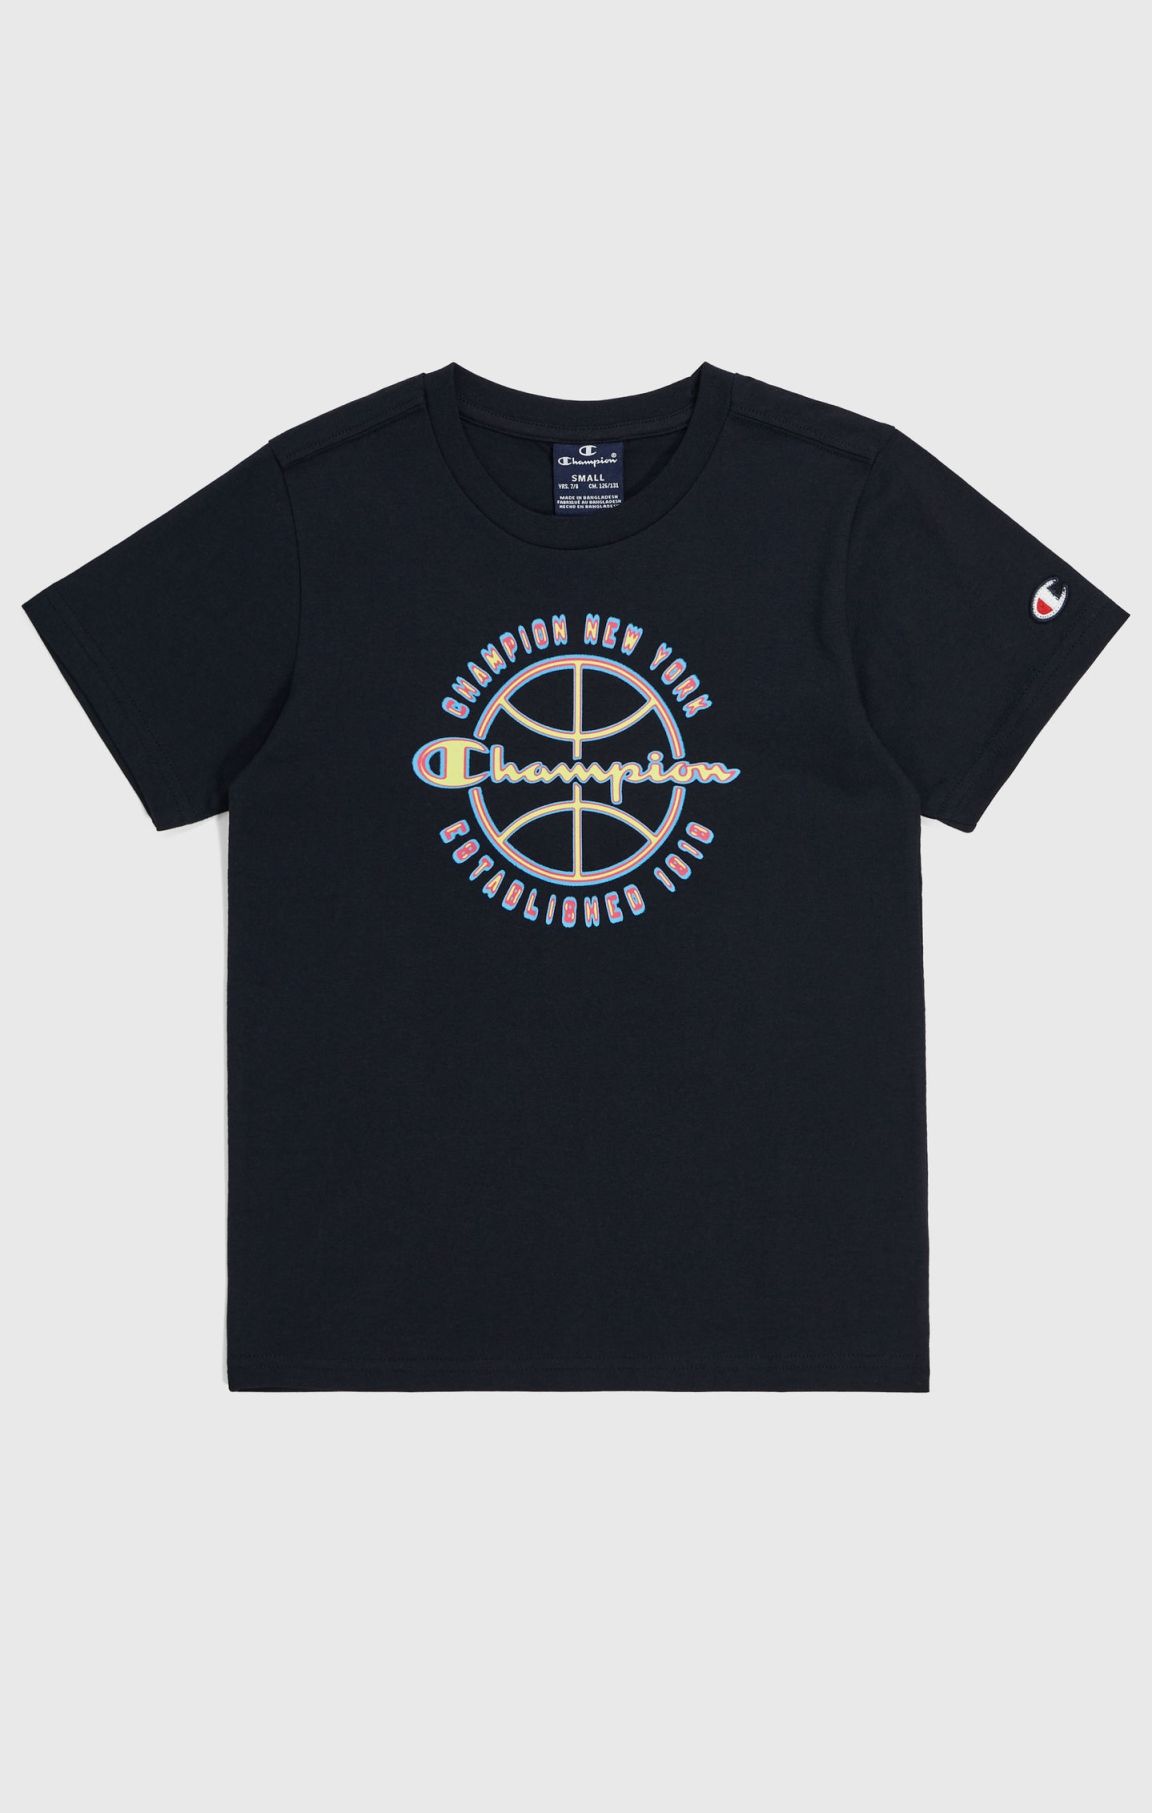 Camiseta de niño de baloncesto de algodón